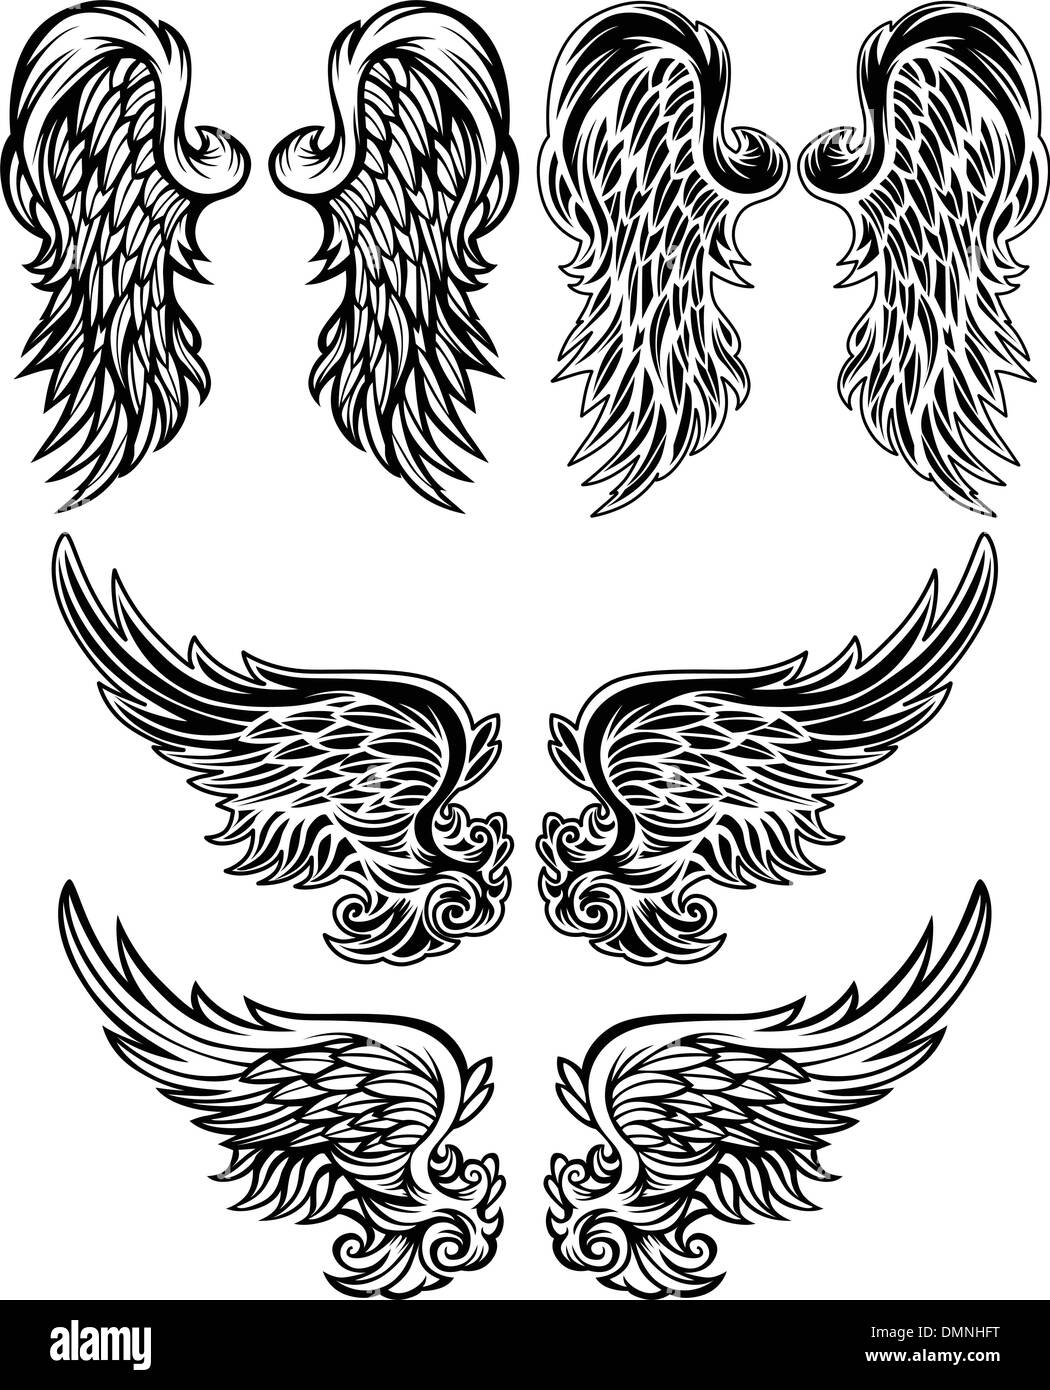 Engel Flügel Vektor-Illustrationen Stock Vektor